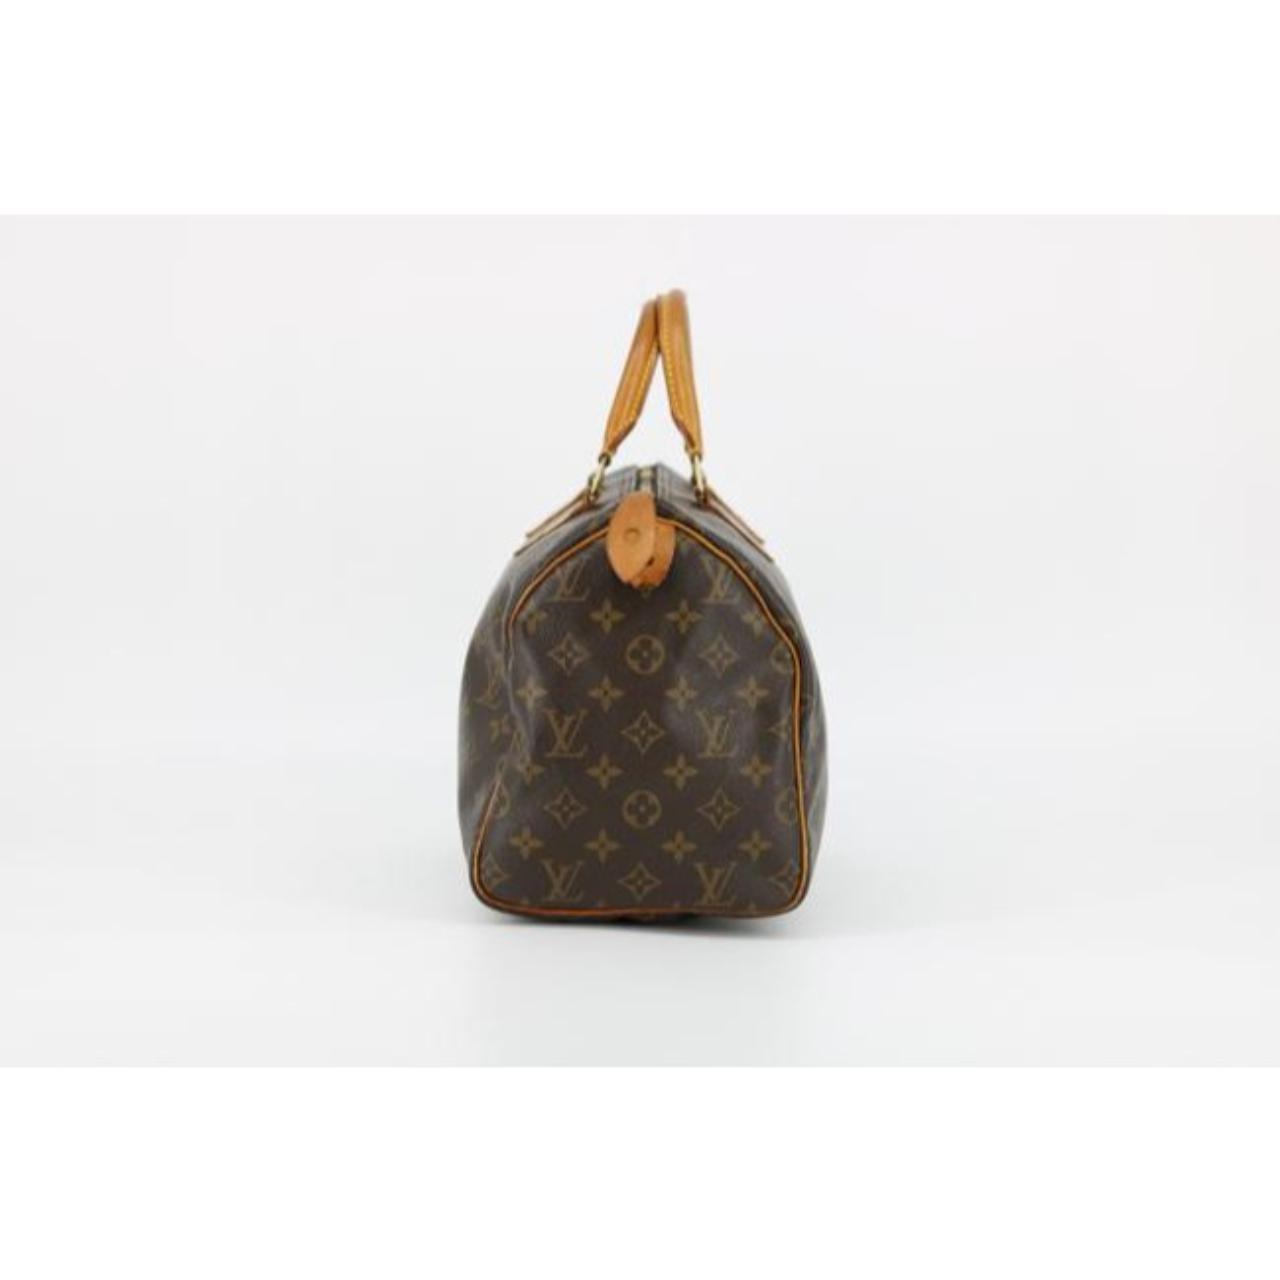 AUTHENTIC: Louis Vuitton Speedy 30 Bag The zipper - Depop